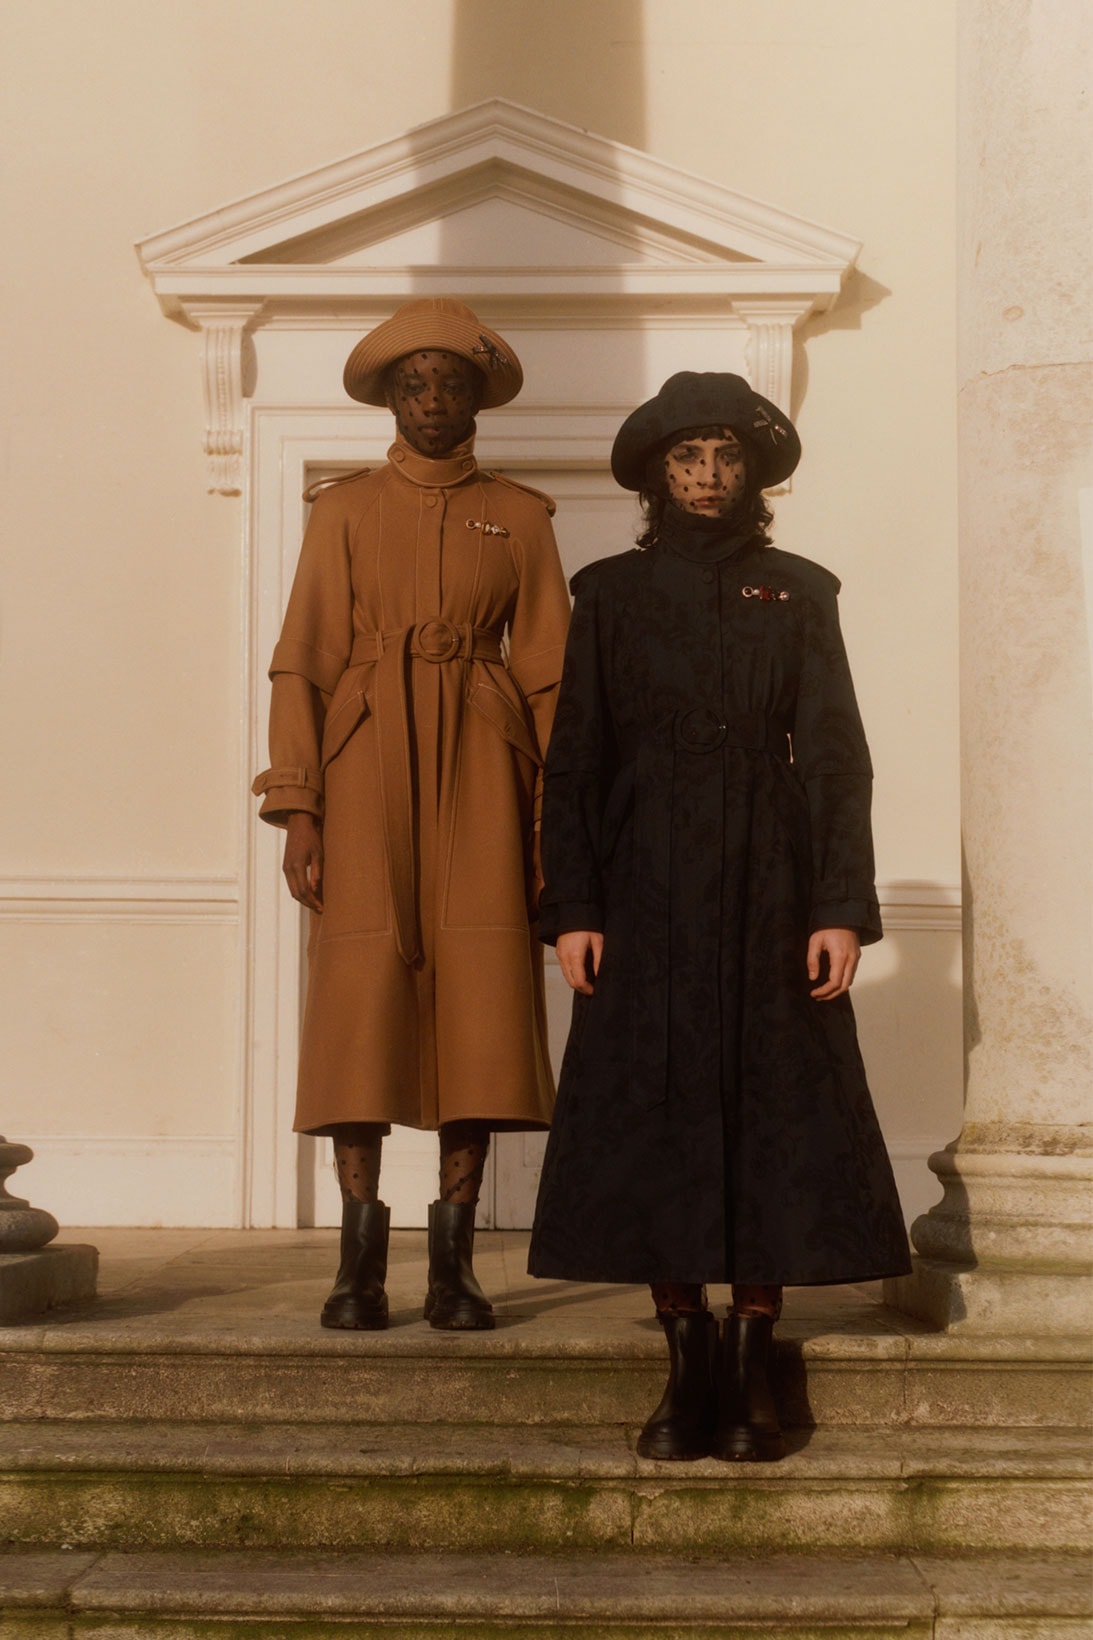 erdem moralioglu pre-fall 2021 collection lookbook nancy mitford brown black lace coats